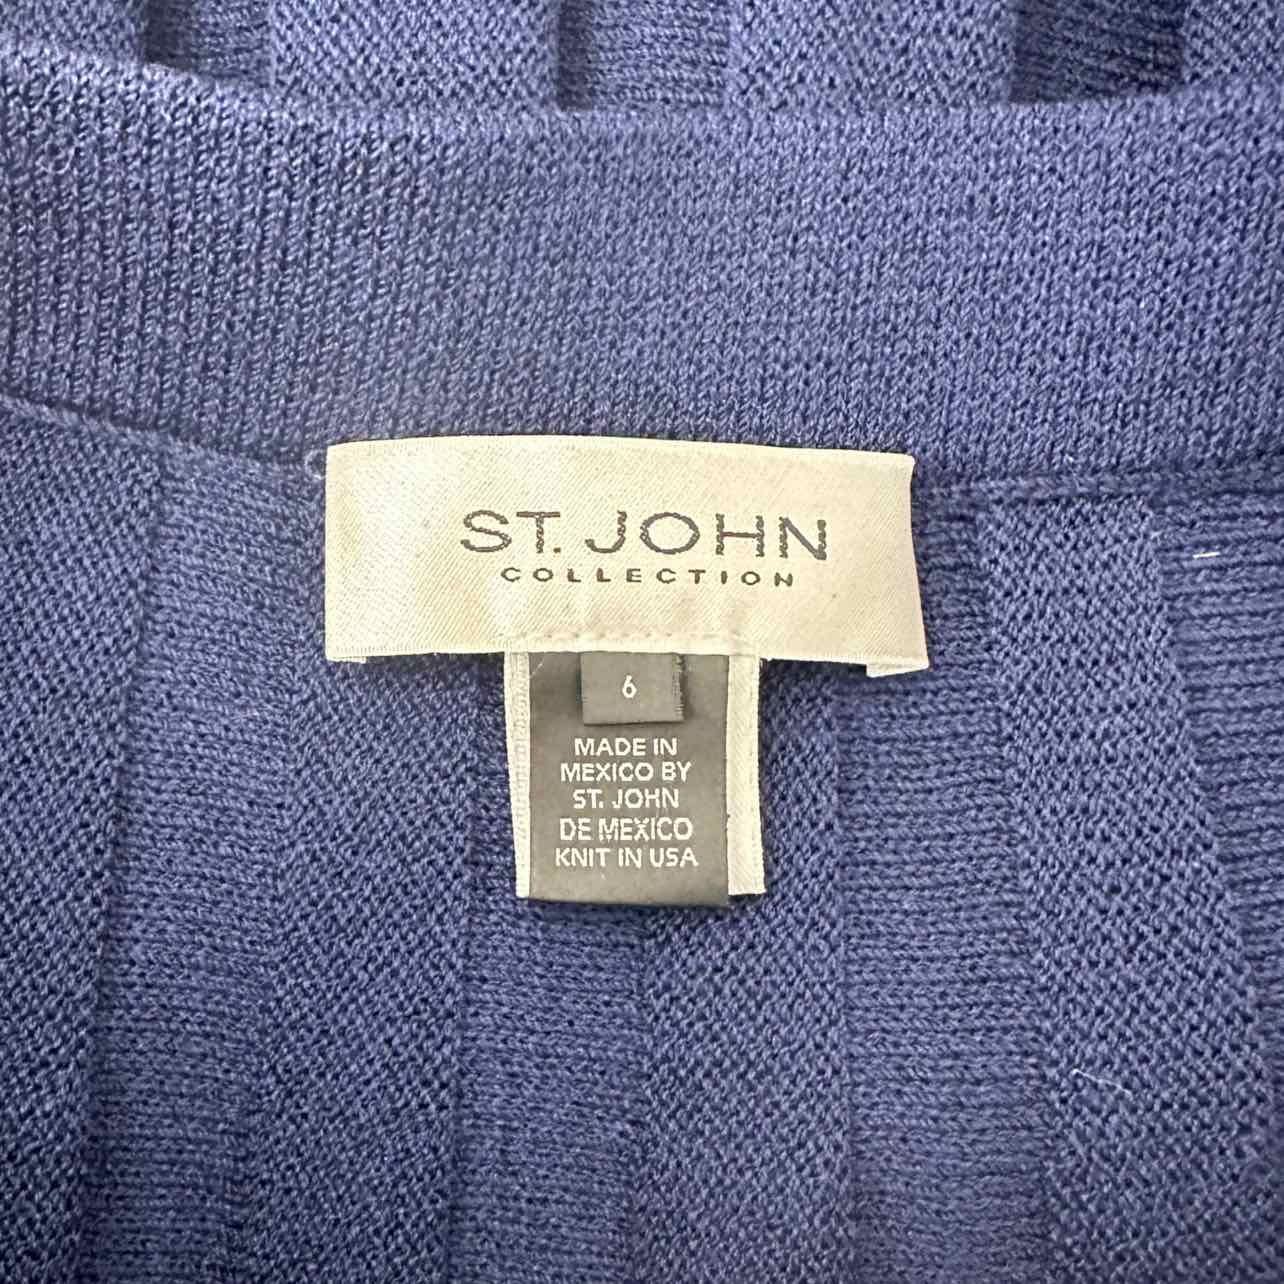 St. John Navy Knit Skirt Size 6